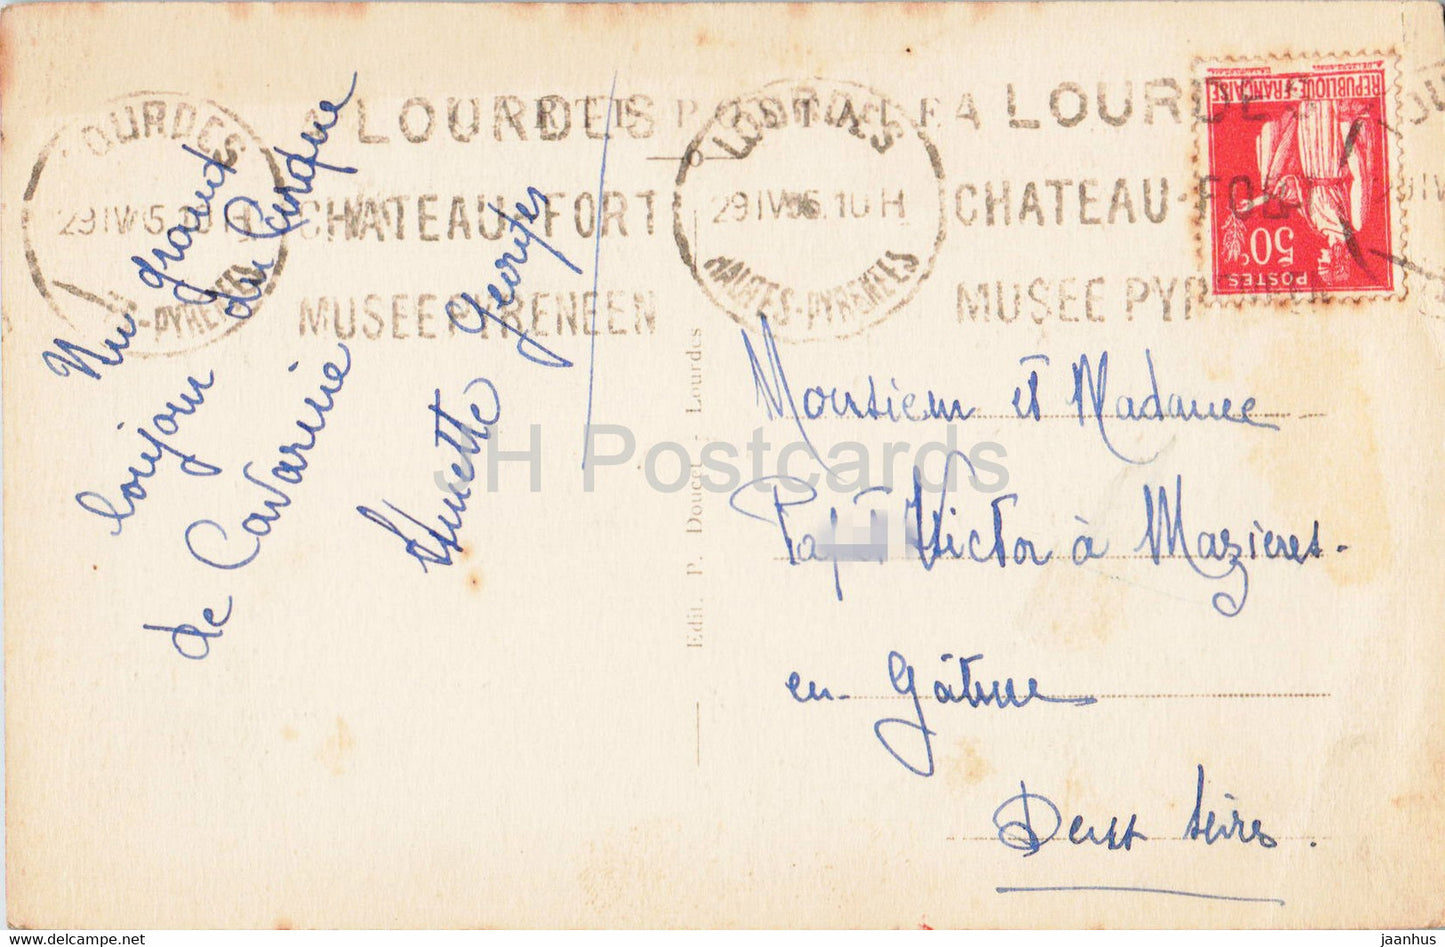 Gavarnie - Le Cirque et la Grande Cascade 422 m - 14 - alte Postkarte - 1936 - Frankreich - gebraucht